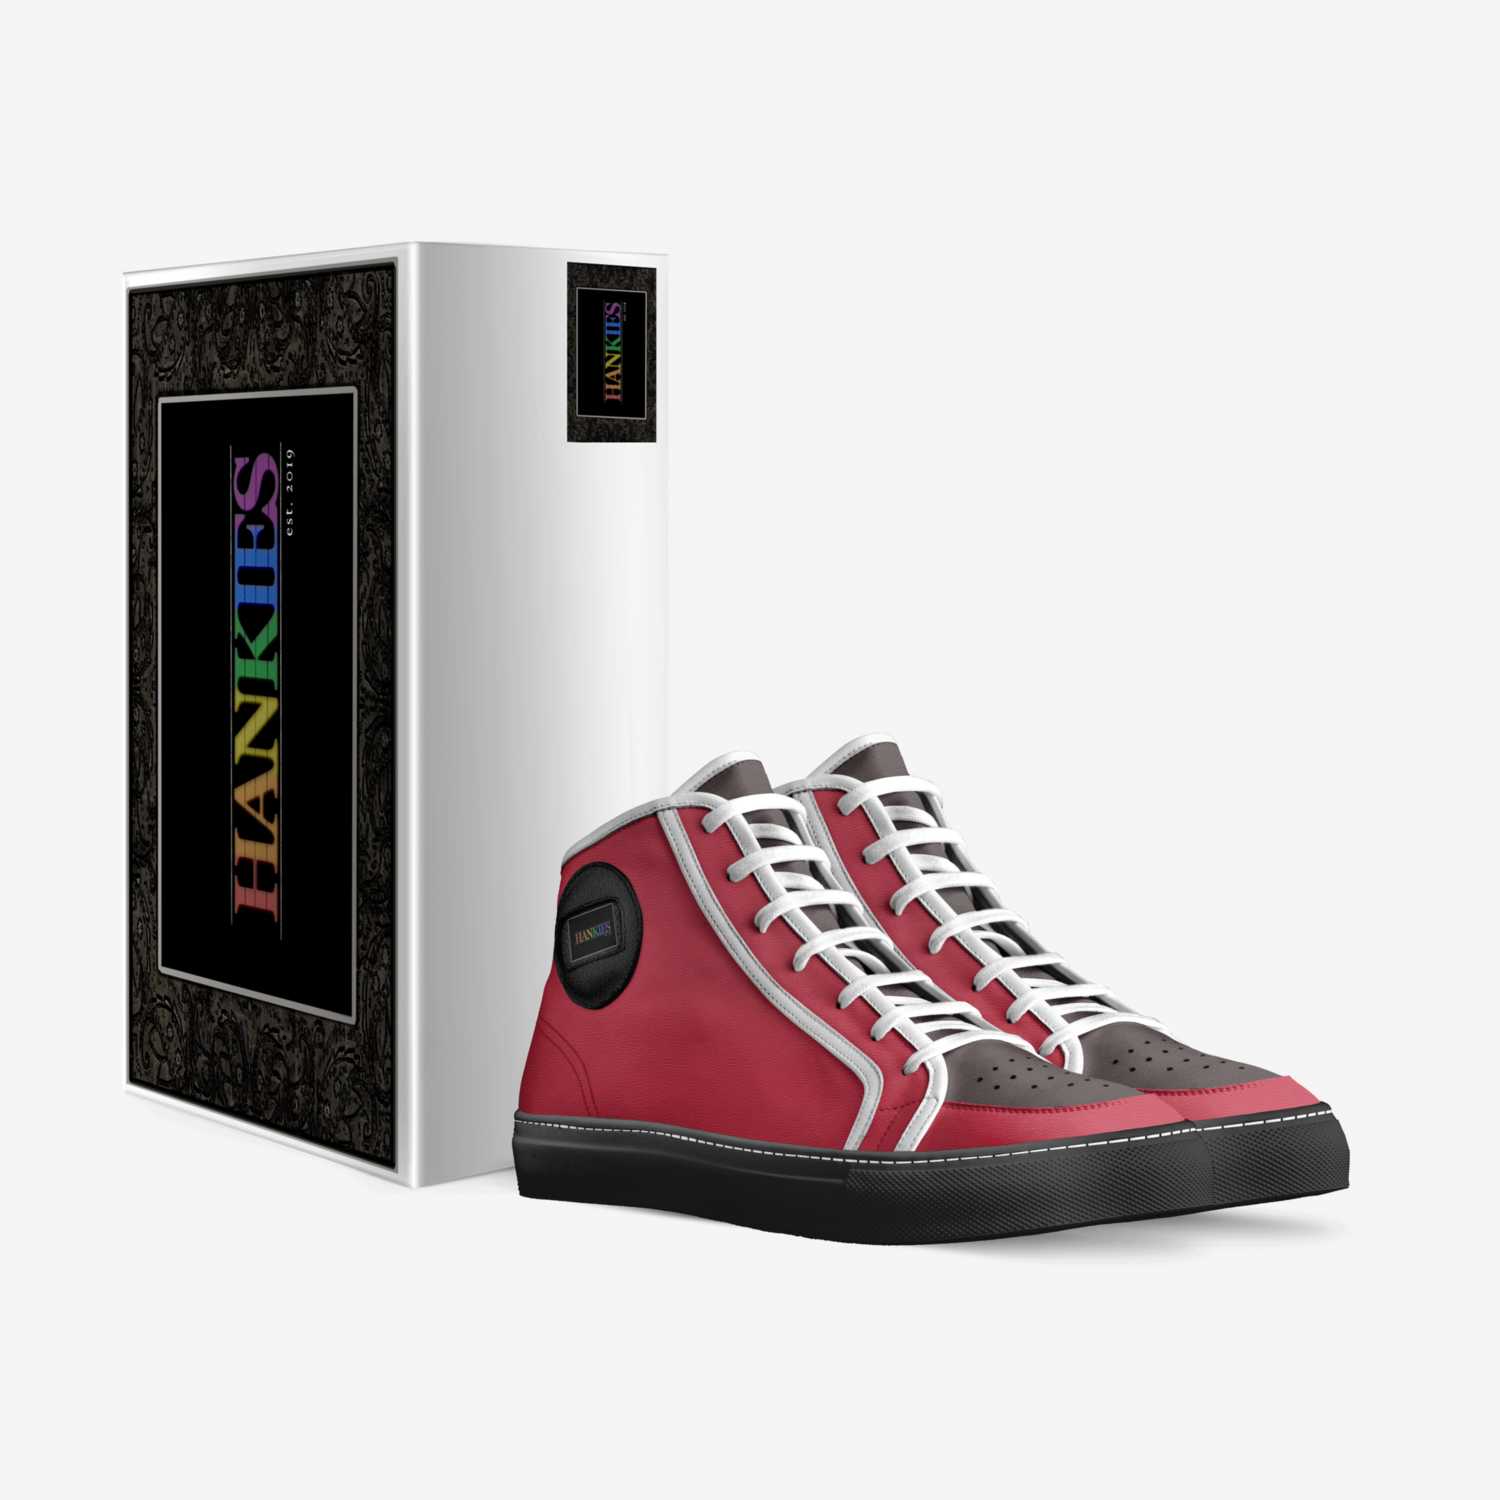 Hankies custom made in Italy shoes by Brandon Banderas | Box view